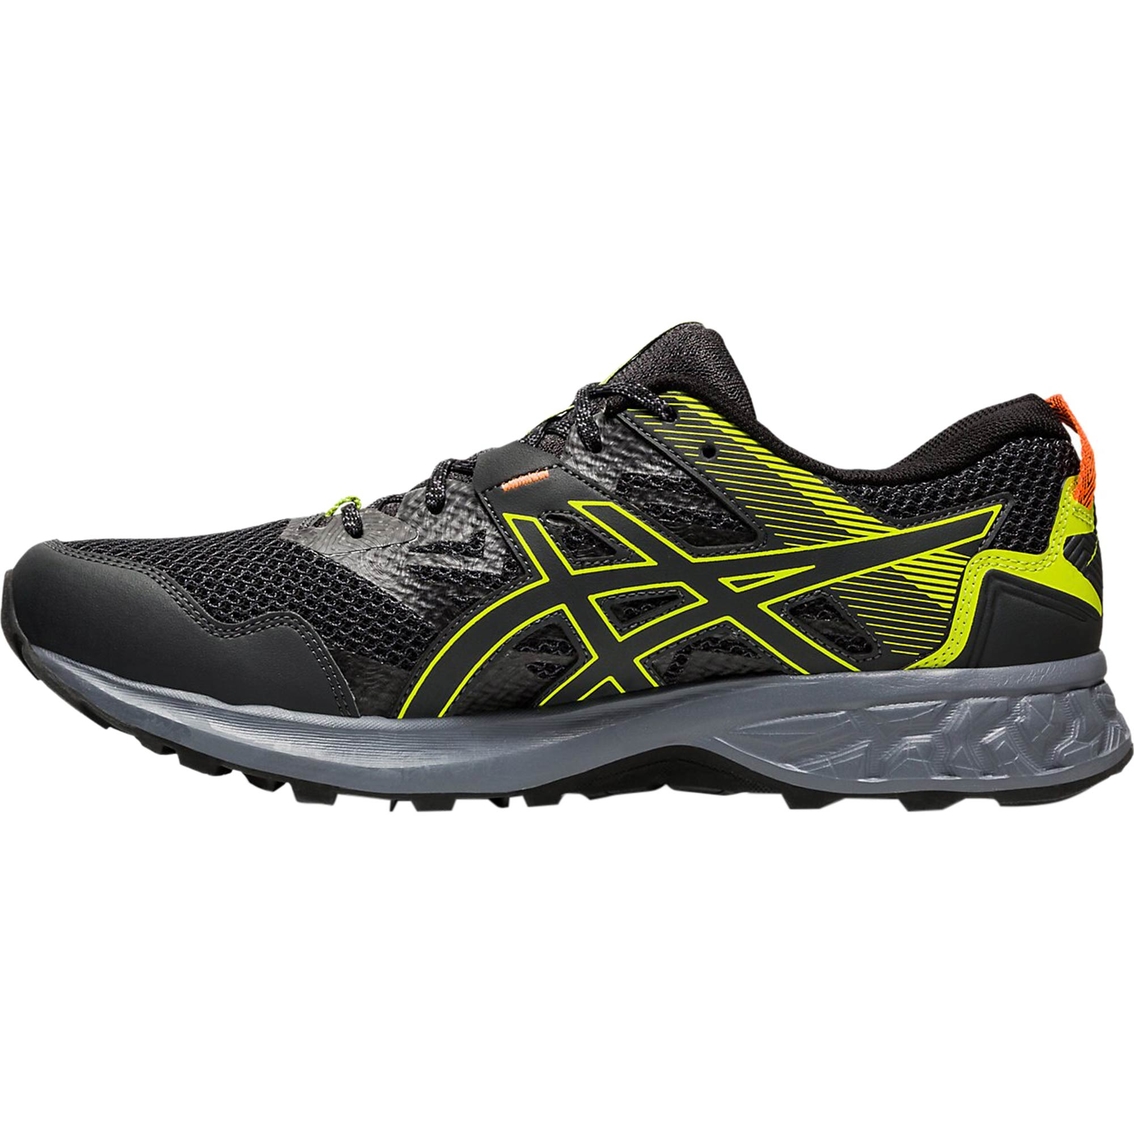 Asics Men's Gel Sonoma 5 Trail Running Shoes | Men's Athletic Shoes ...